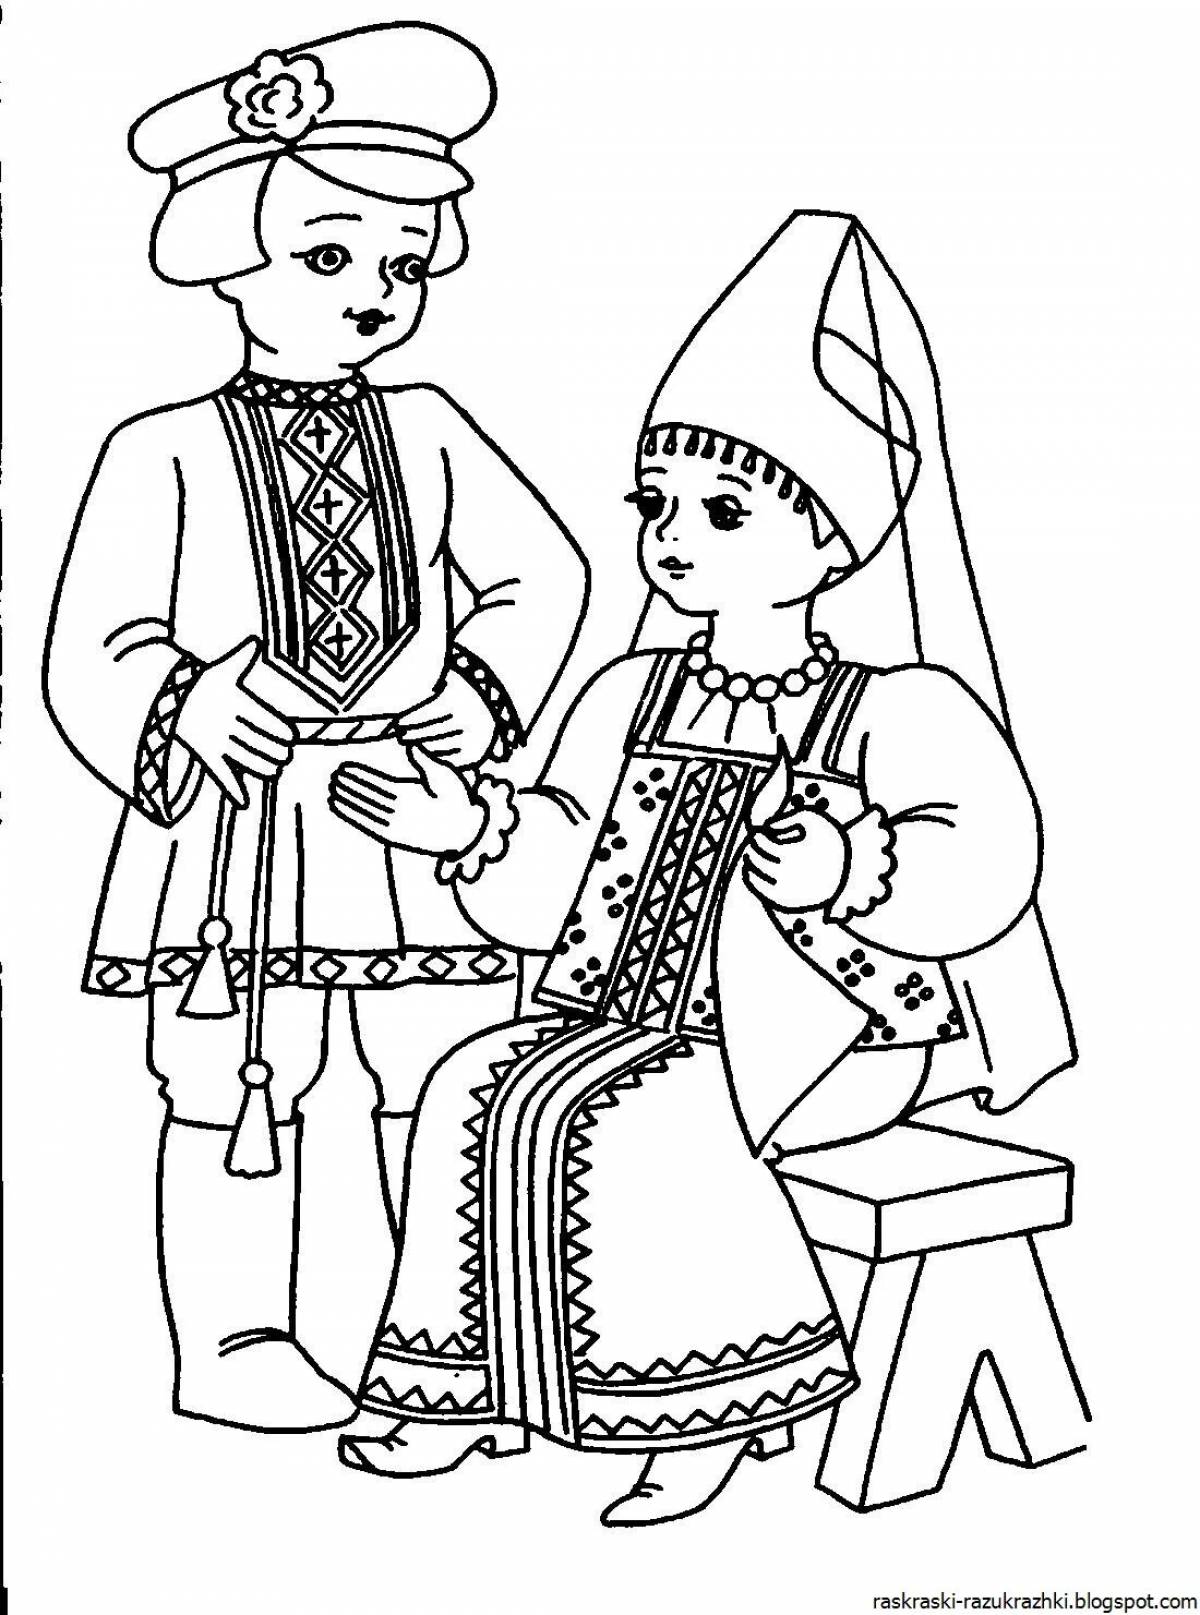 Playful coloring of folk costume for children